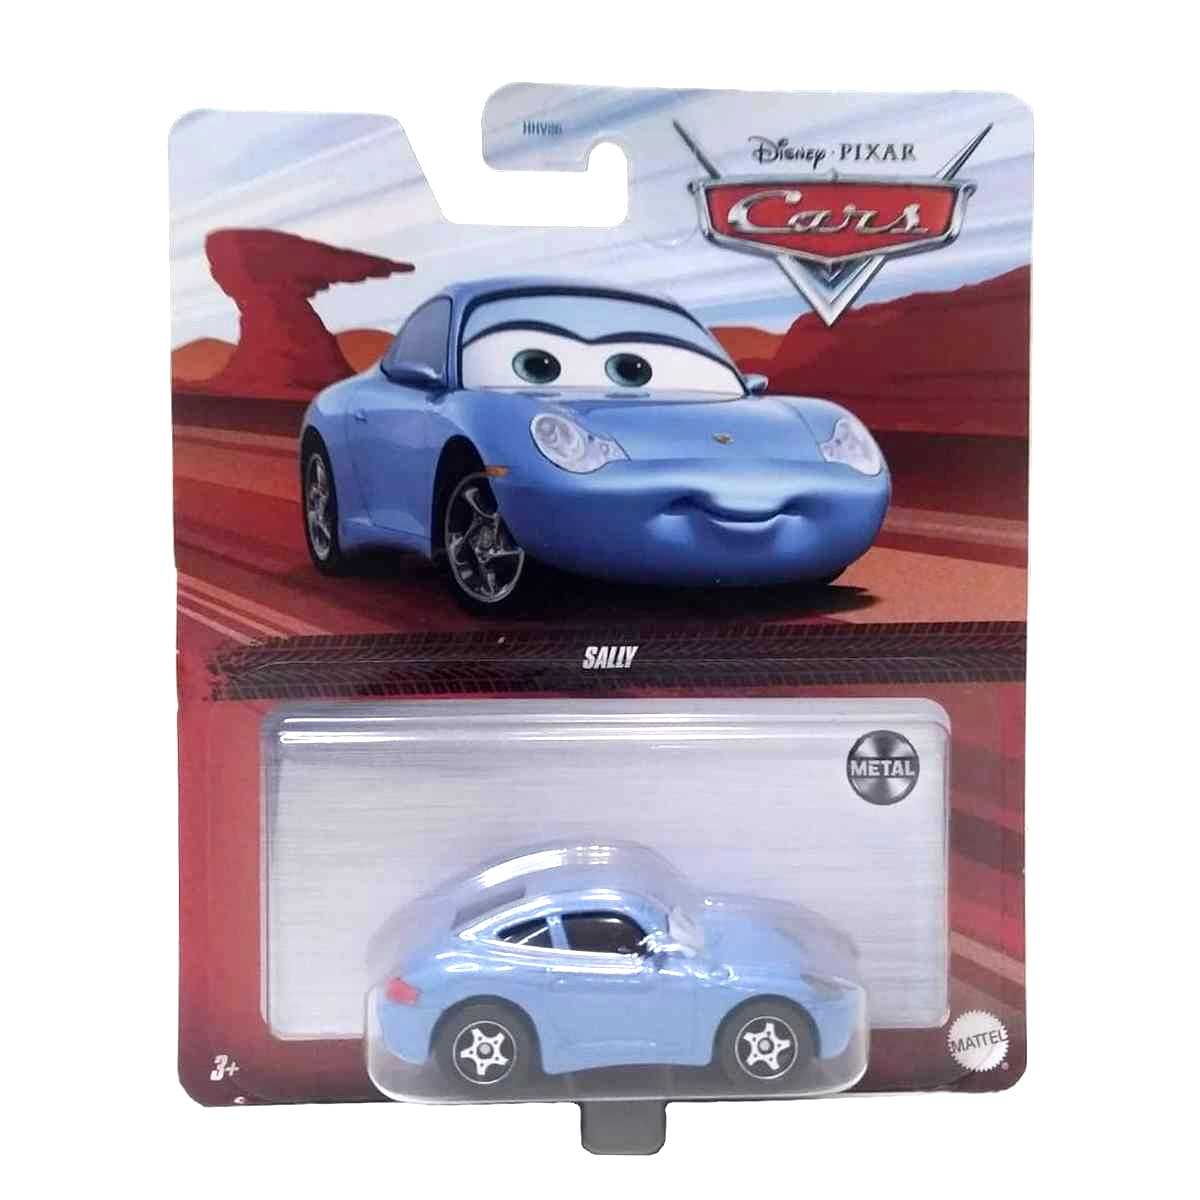 Disney Pixar Cars Carros Sally DXV29 HHV86 FJH98 escala 1/55